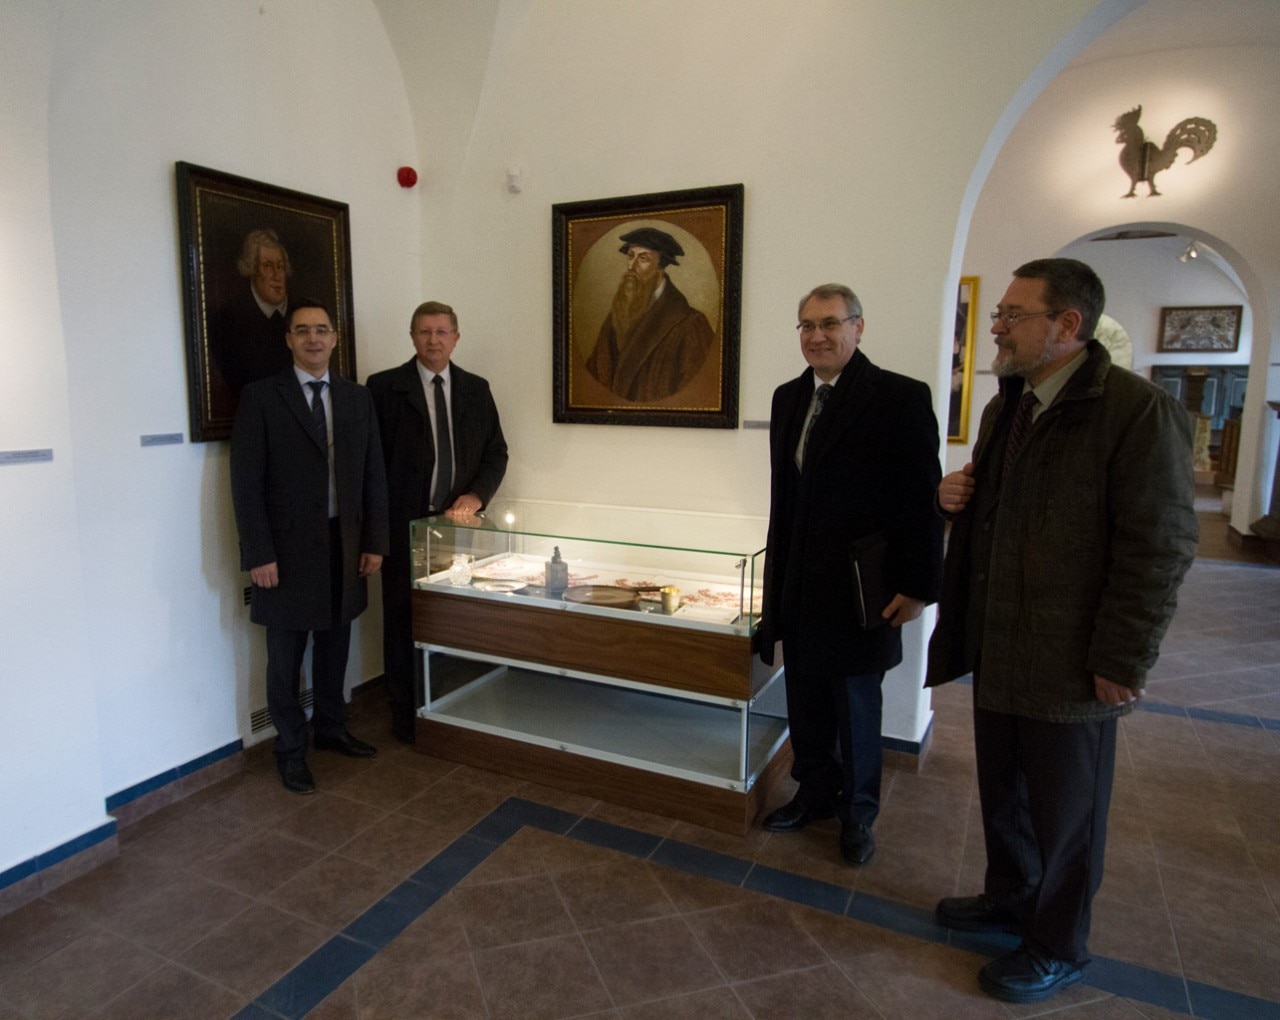 Bishop Károly Fekete, Mayor László Papp, the Ambassador and the dirctor of the museum Dr. Botond Gáborjáni Szabó 